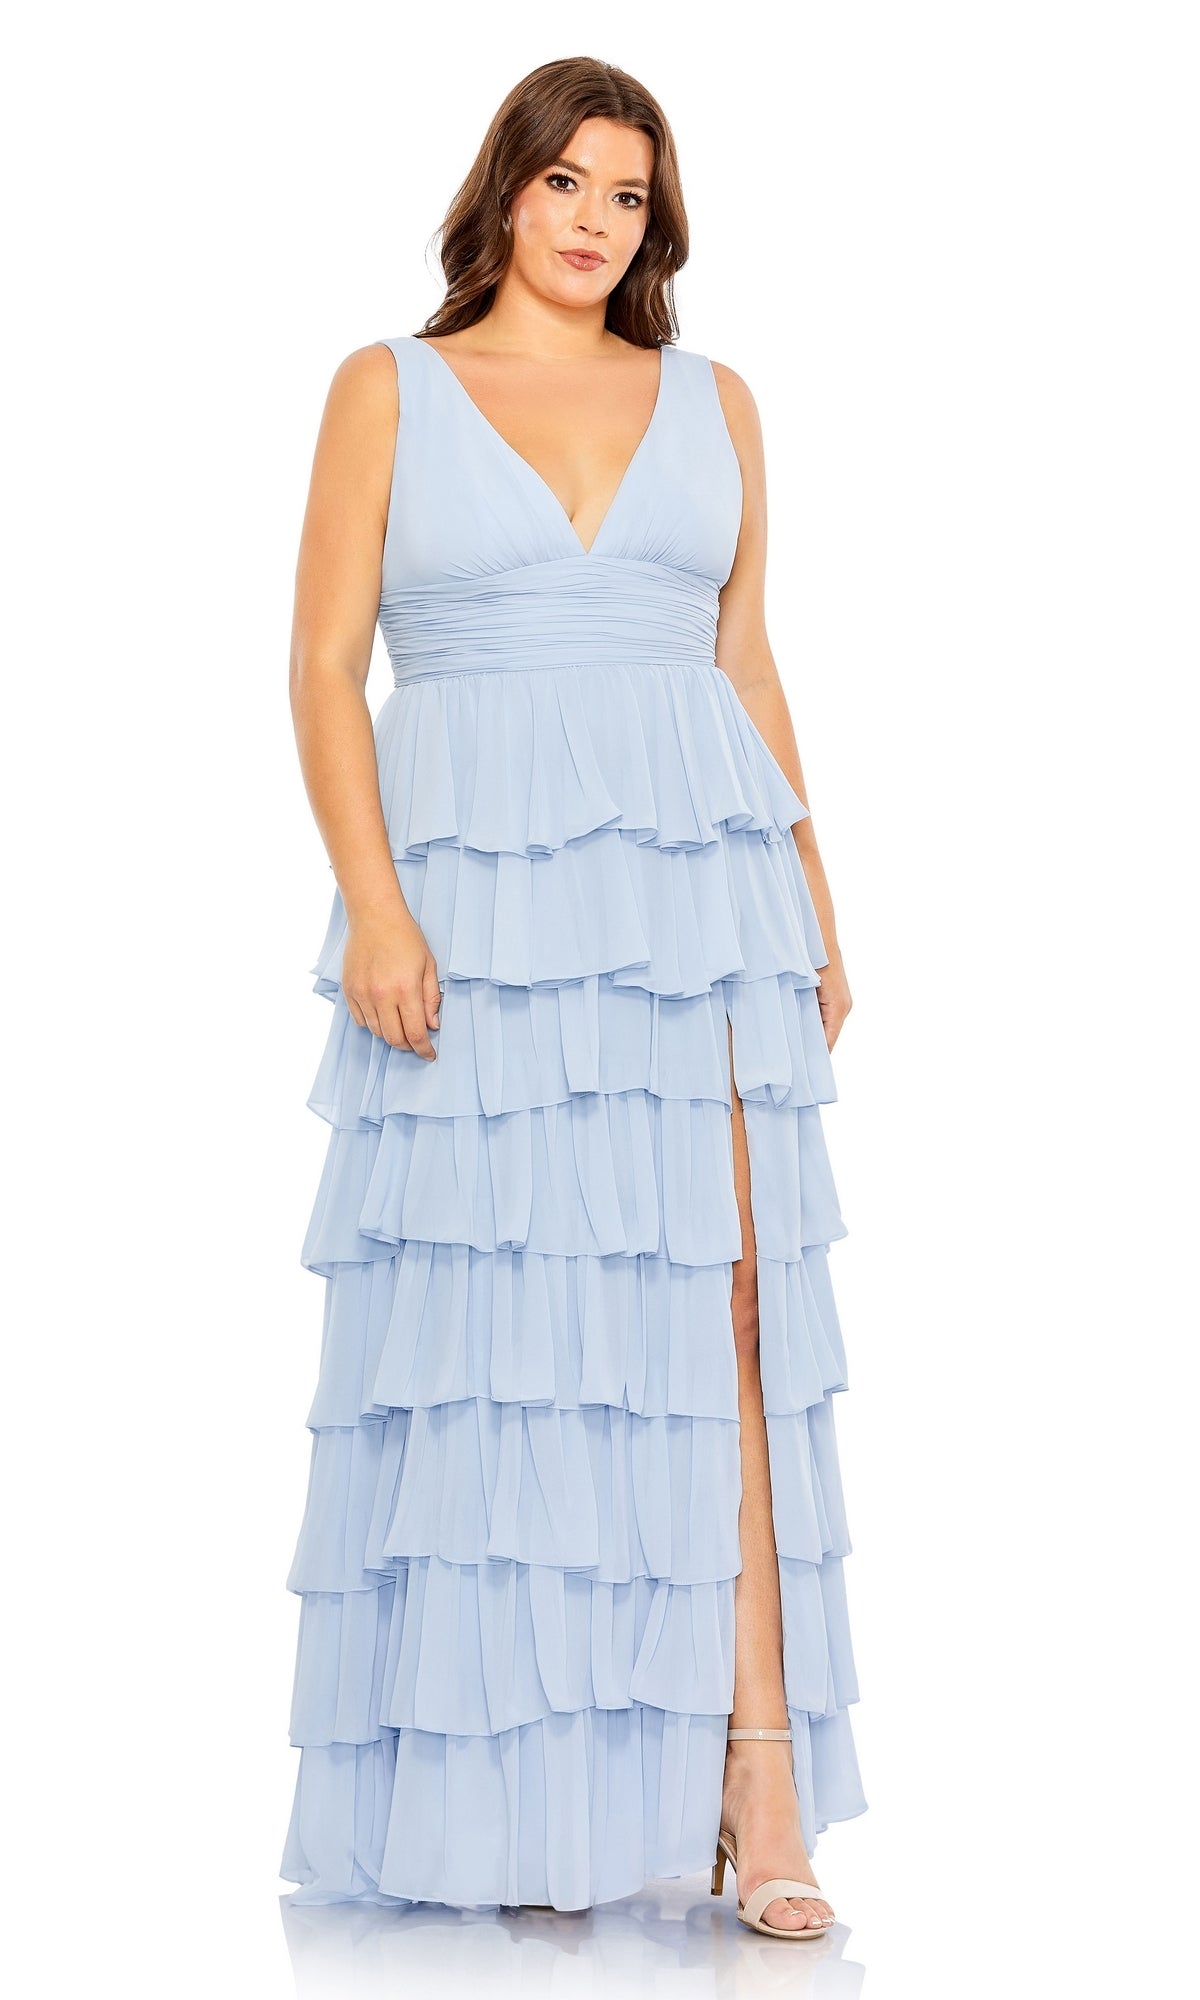 Long Plus-Size Formal Dress 68119 by Mac Duggal